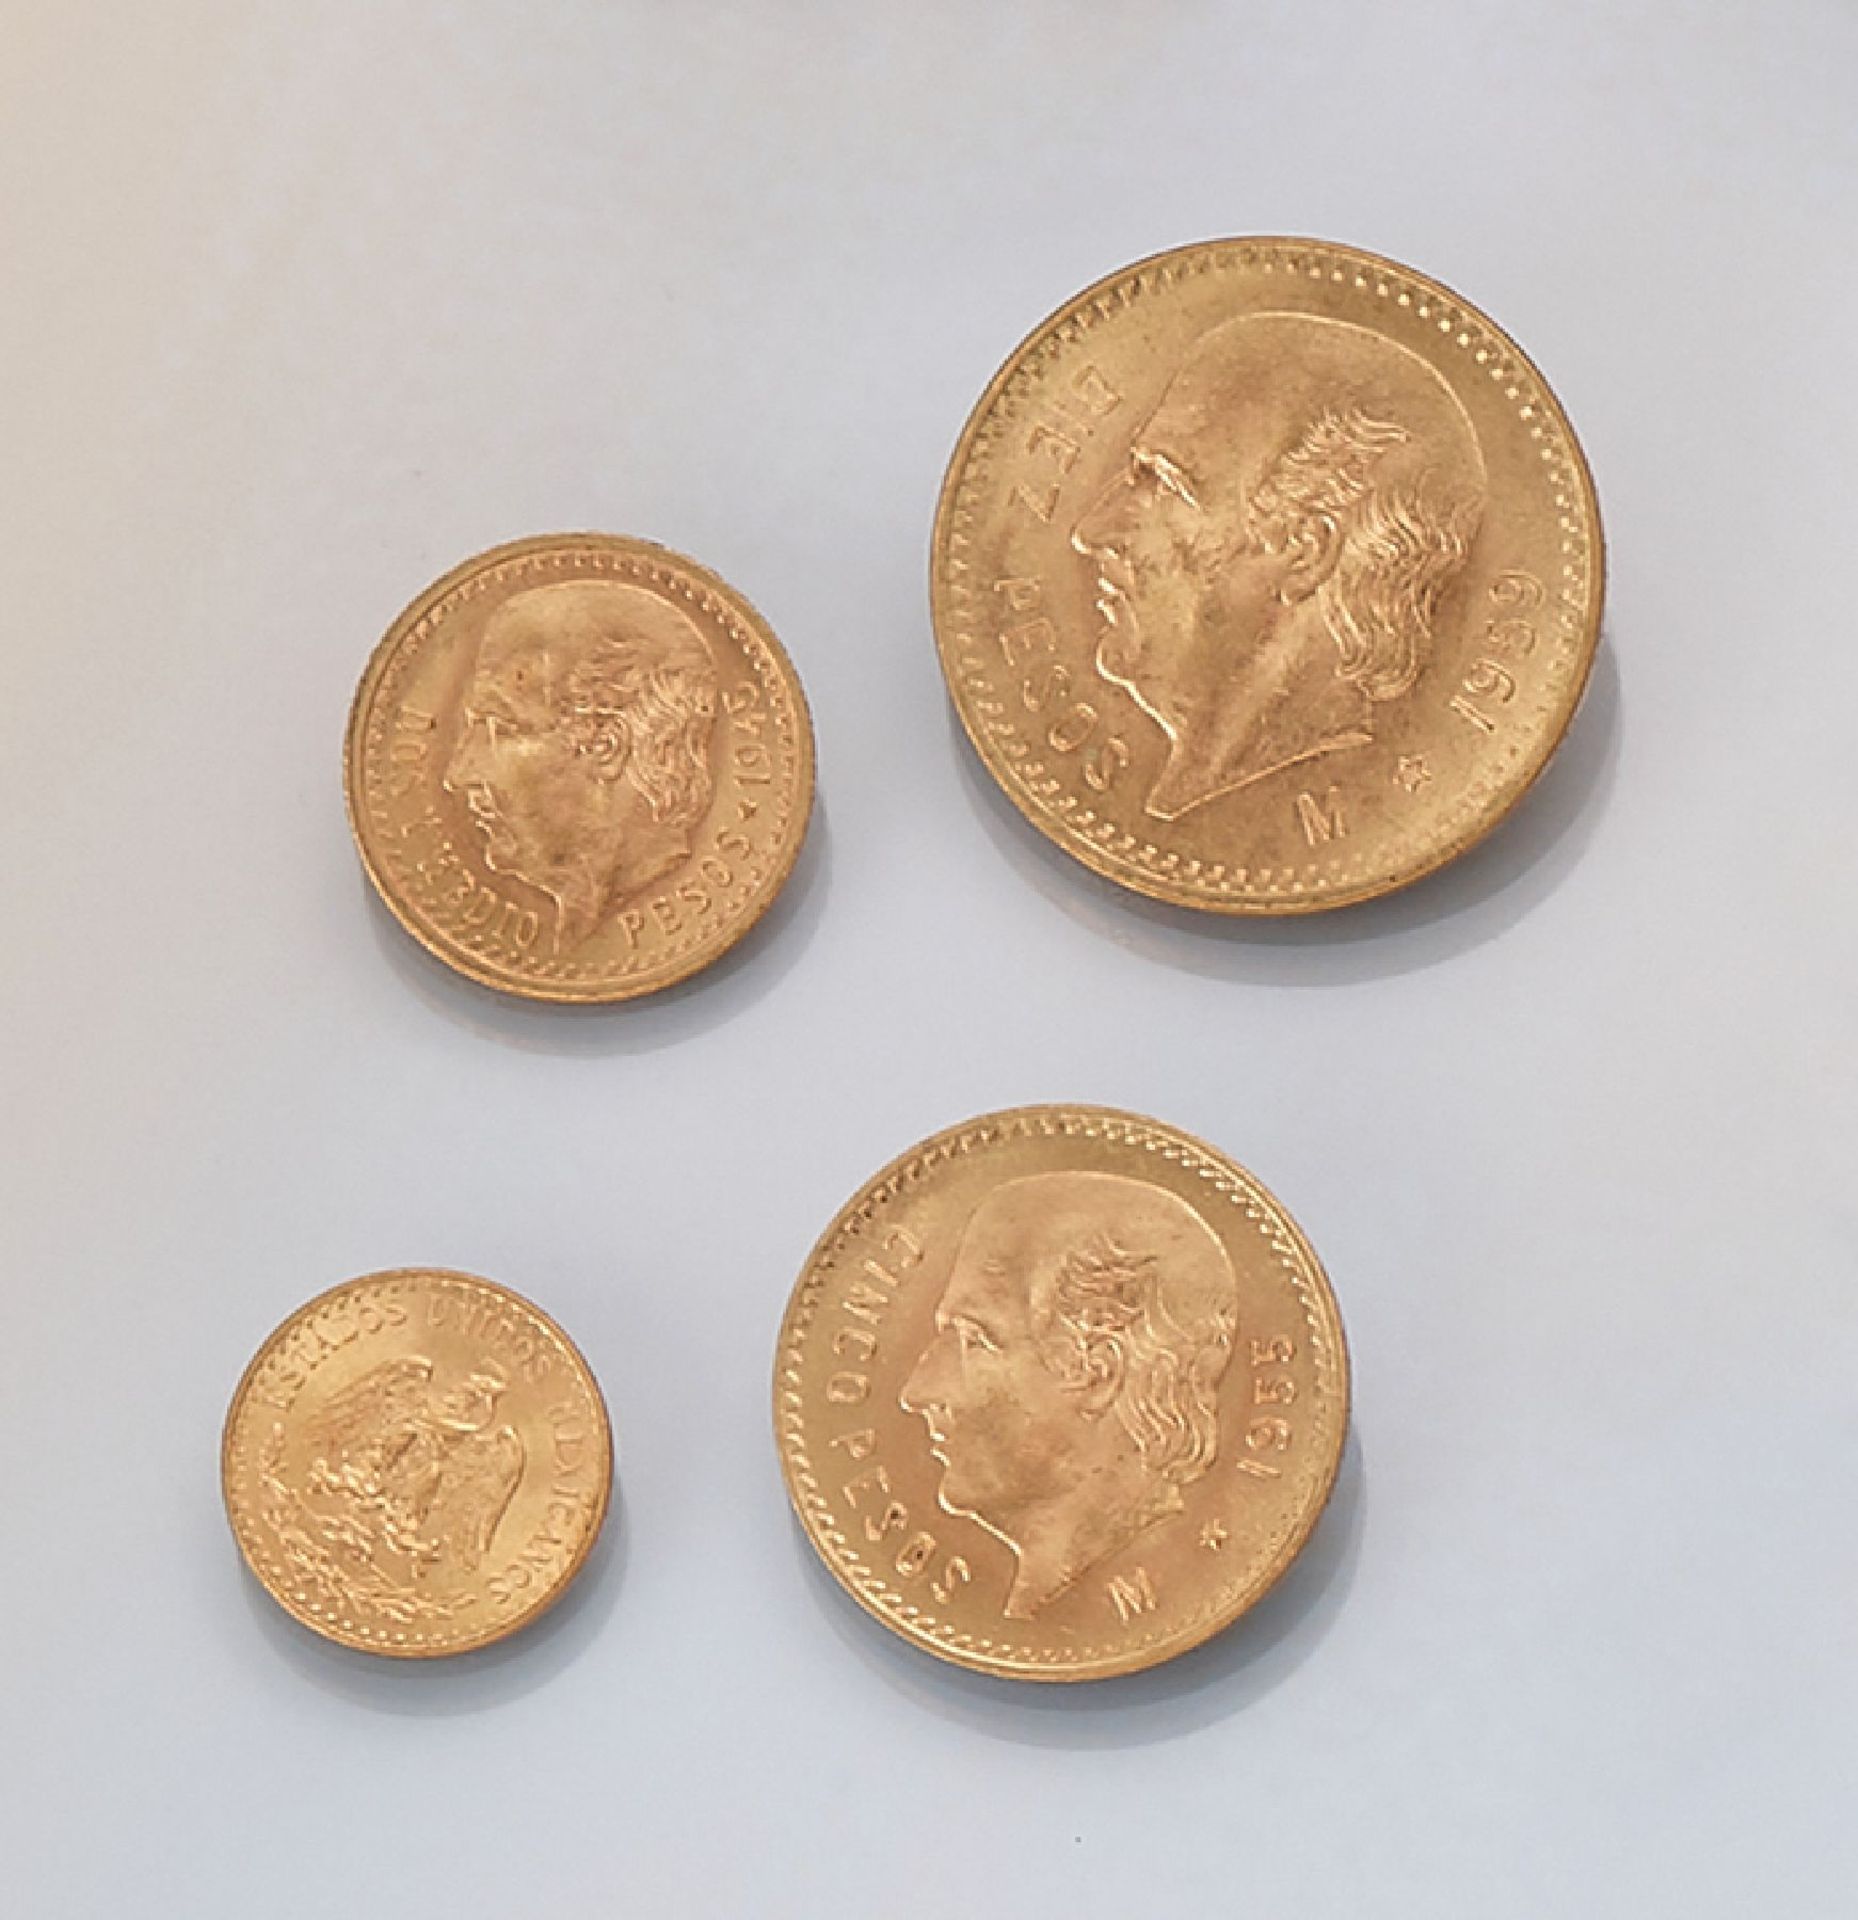 Lot 4 gold coins, Mexico , comprised of: 1 x10 Pesos, 1959, 1 x 5 Pesos, 1955, 1 x 2.5 Pesos,